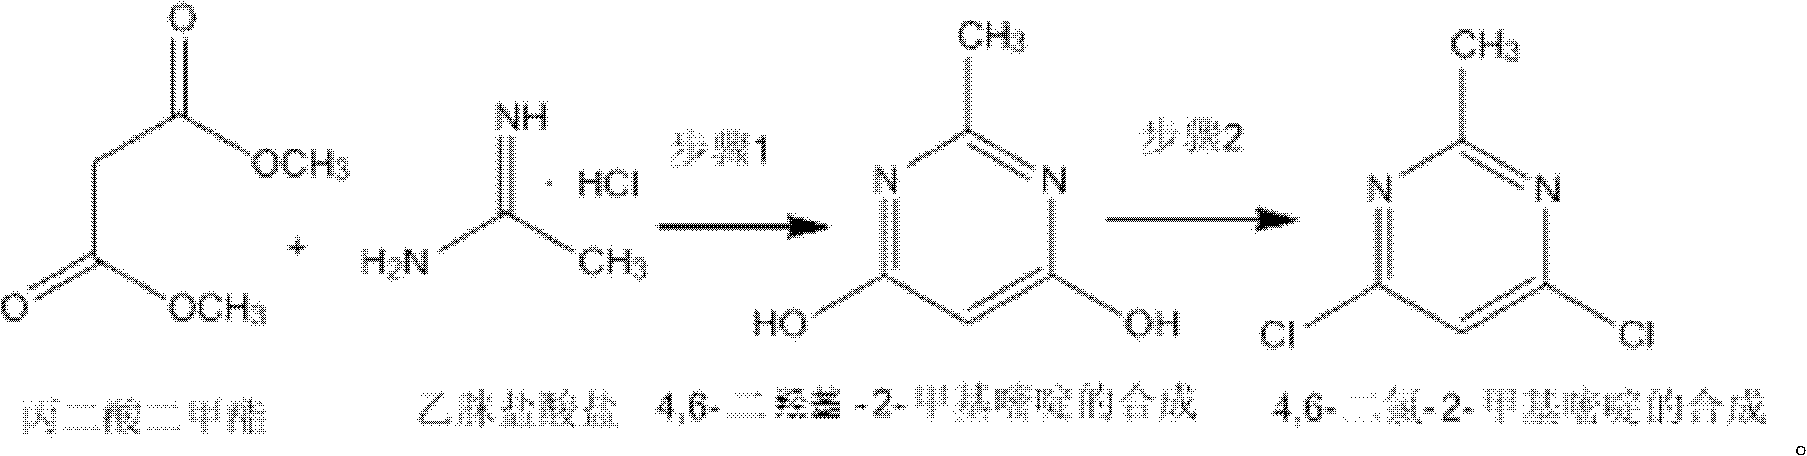 Method for synthetizing 4,6-dichloro-2-methyl pyridine